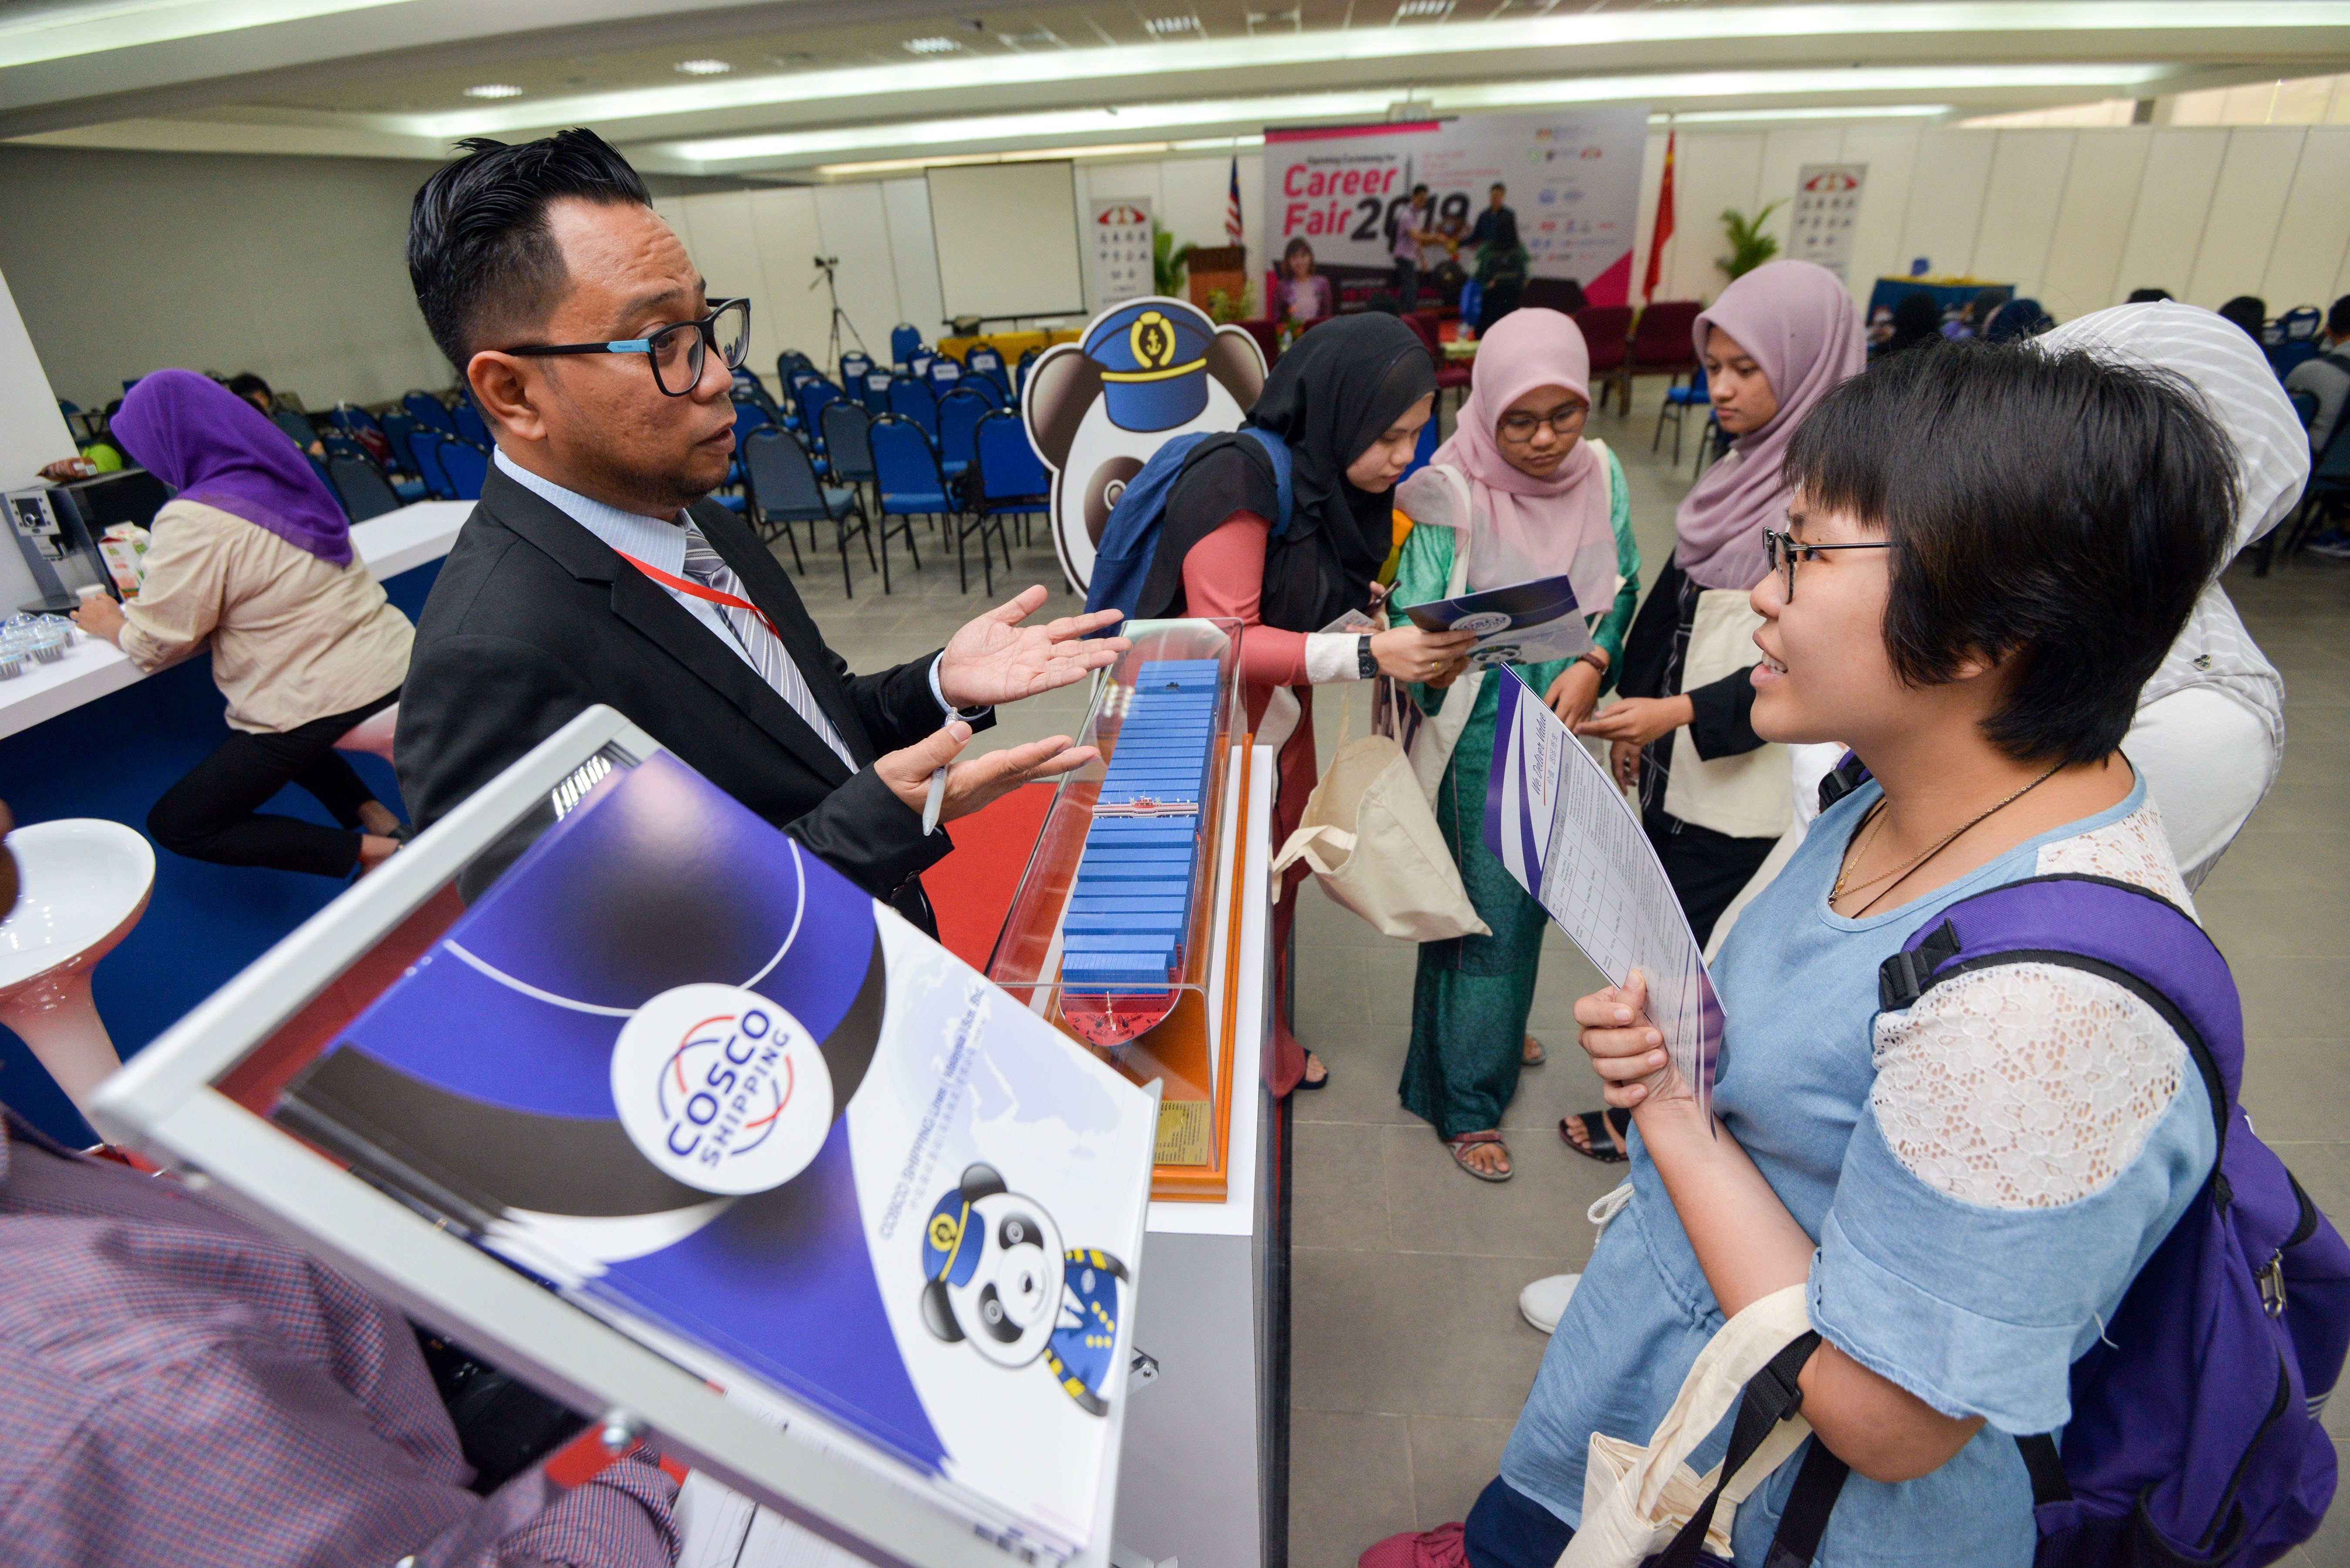 Job-seeking students talk to a representative of Cosco Shipping at a job fair of leading Chinese companies at the University of Malaya, in Kuala Lumpur, Malaysia, April 29, 2019. Photo: Xinhua